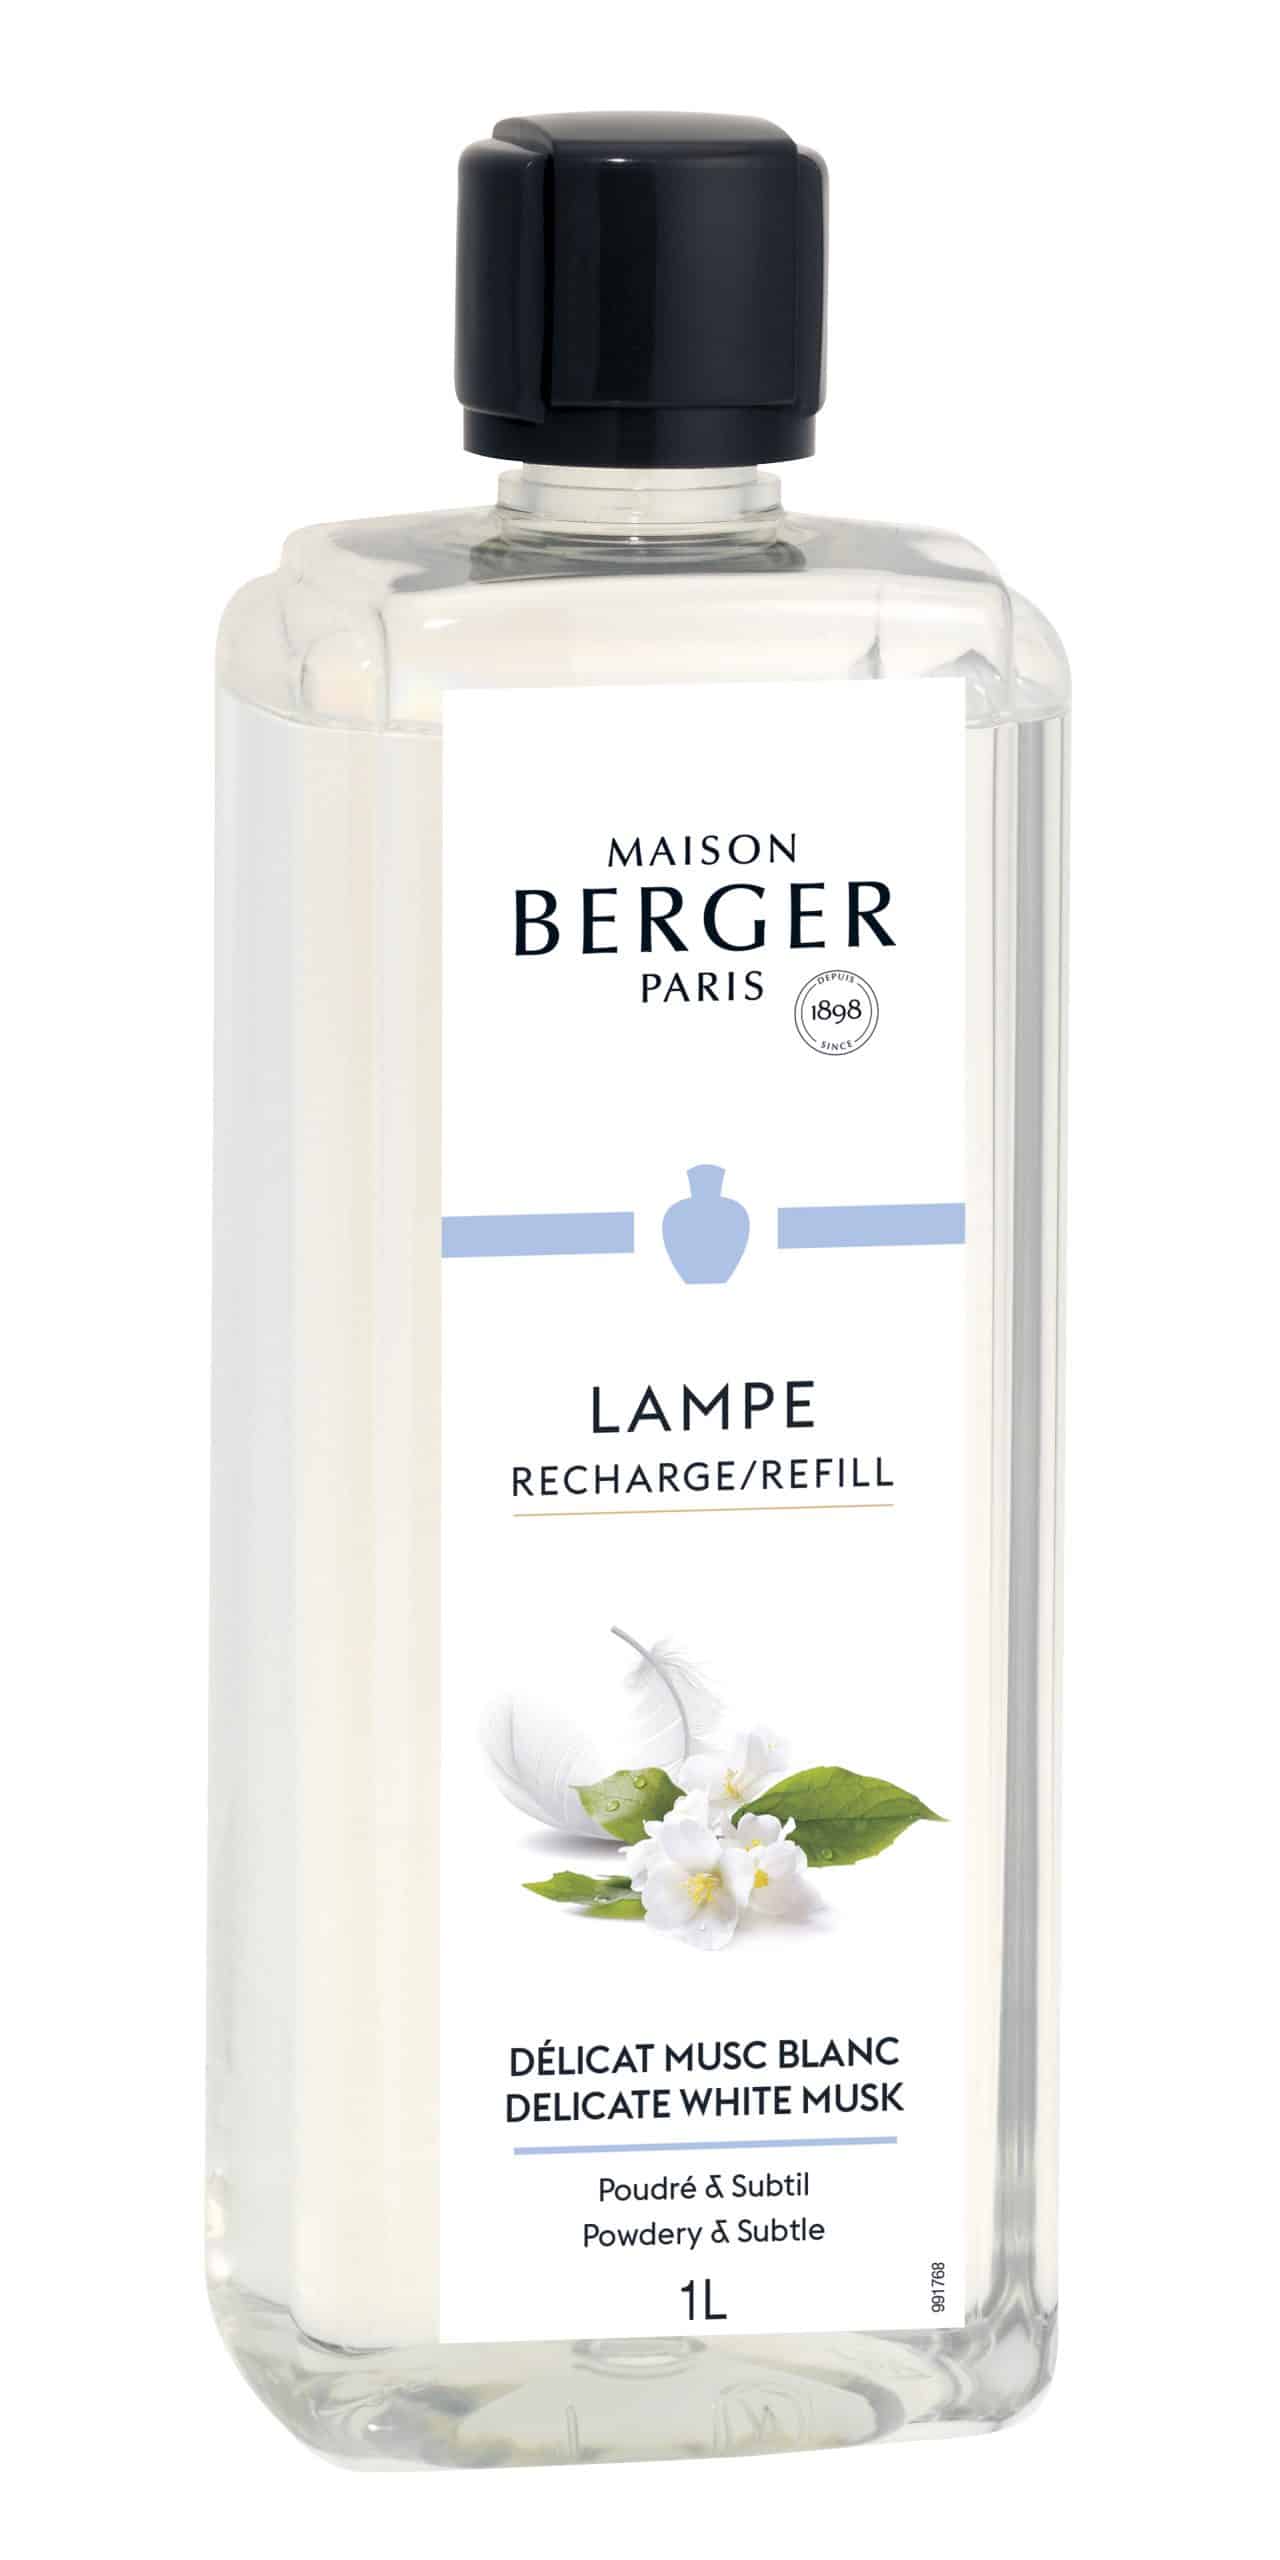 Maison Berger Paris - parfum Delicate White Musk - 1 liter